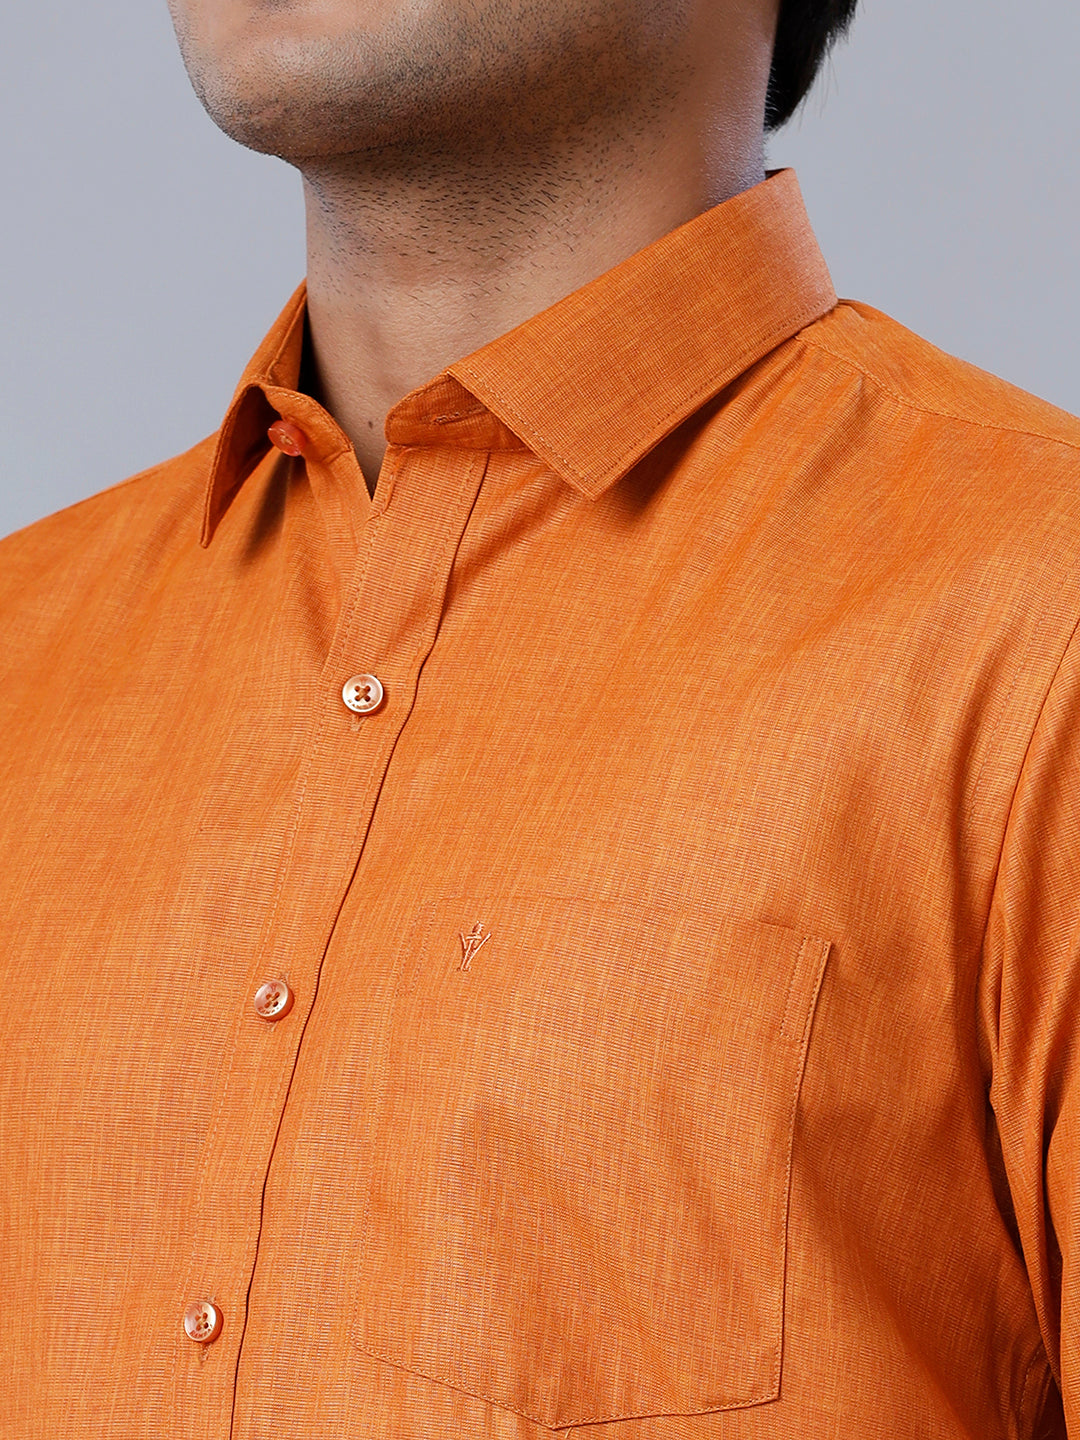 Mens Formal Shirt Full Sleeves Saffron T40 TP7-Zoom view